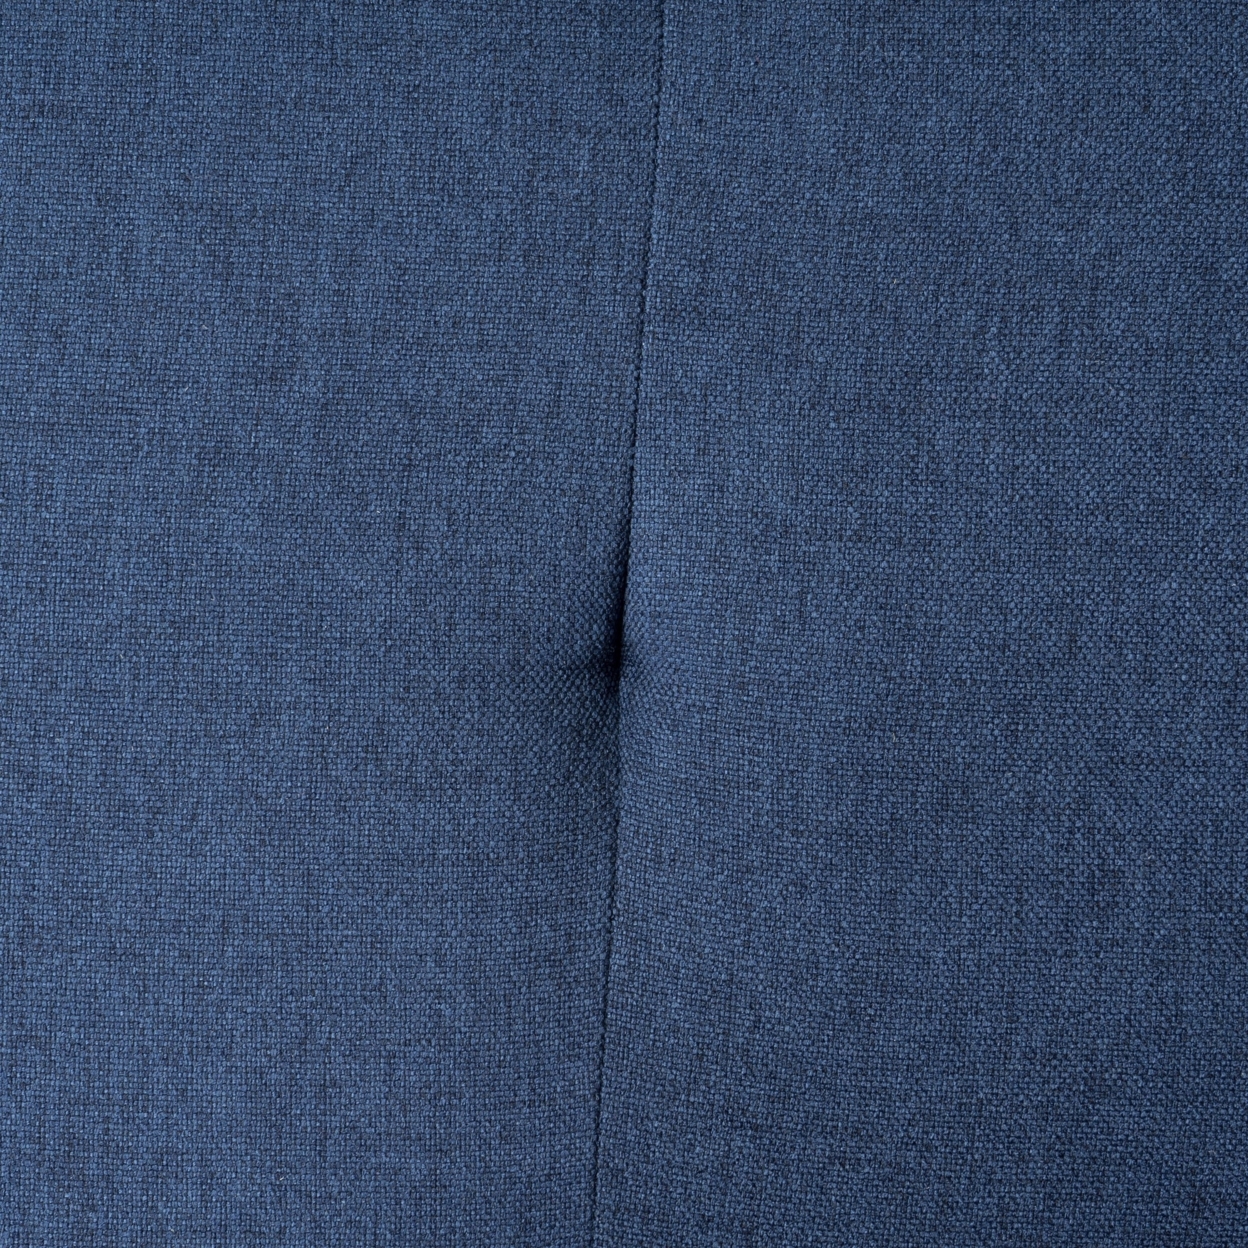 Carolina 7 Piece Versatile Fabric Sectional Couch - Light Gray